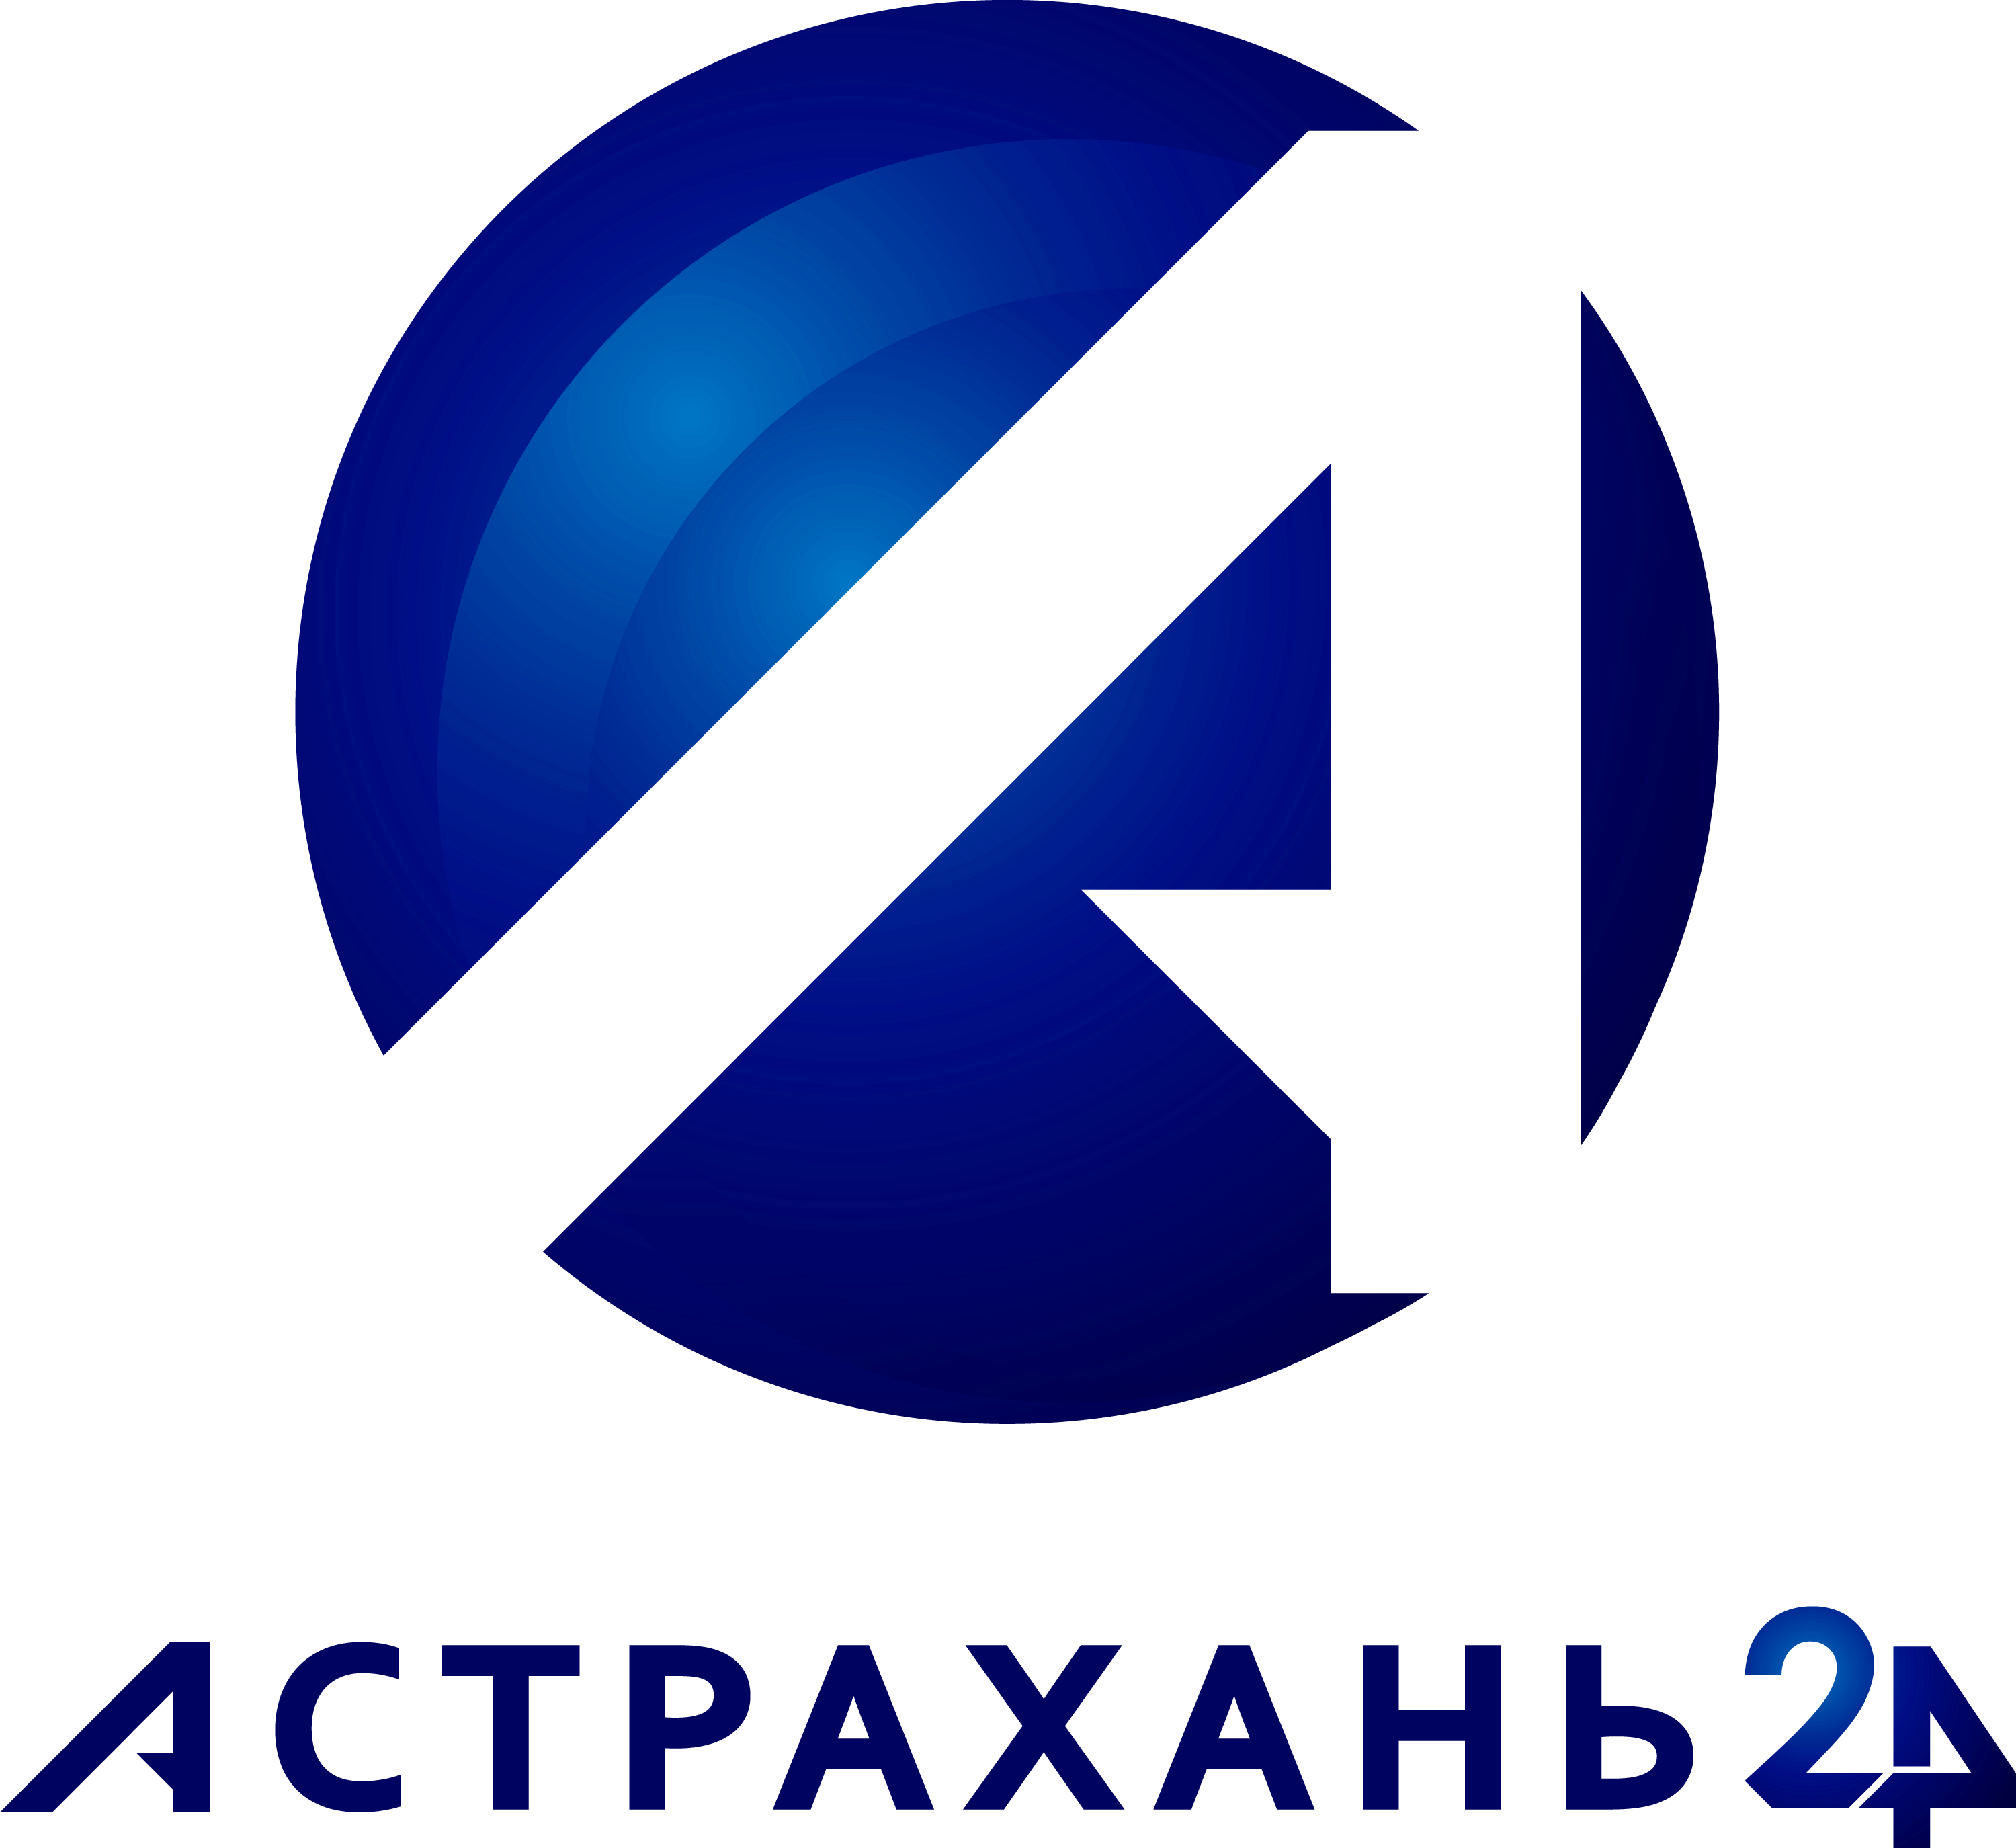 24tv ru. Астрахань 24 logo. Логотип канала Астрахань 24 HD. Телевидение логотип. Эмблема Астраханского ТВ.